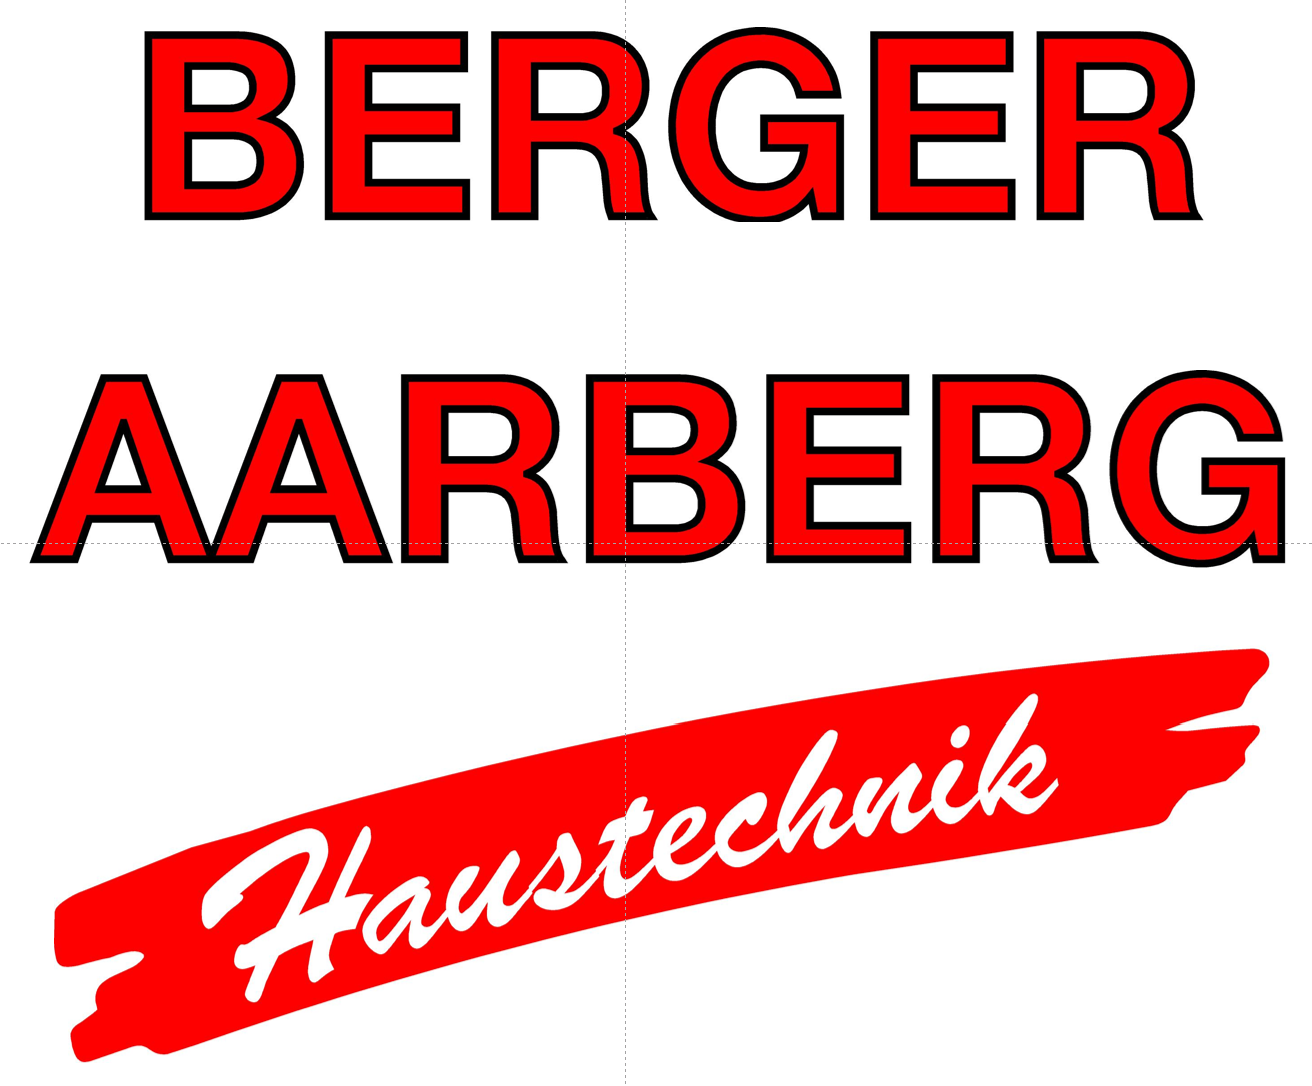 Berger Haustechnik Aarberg